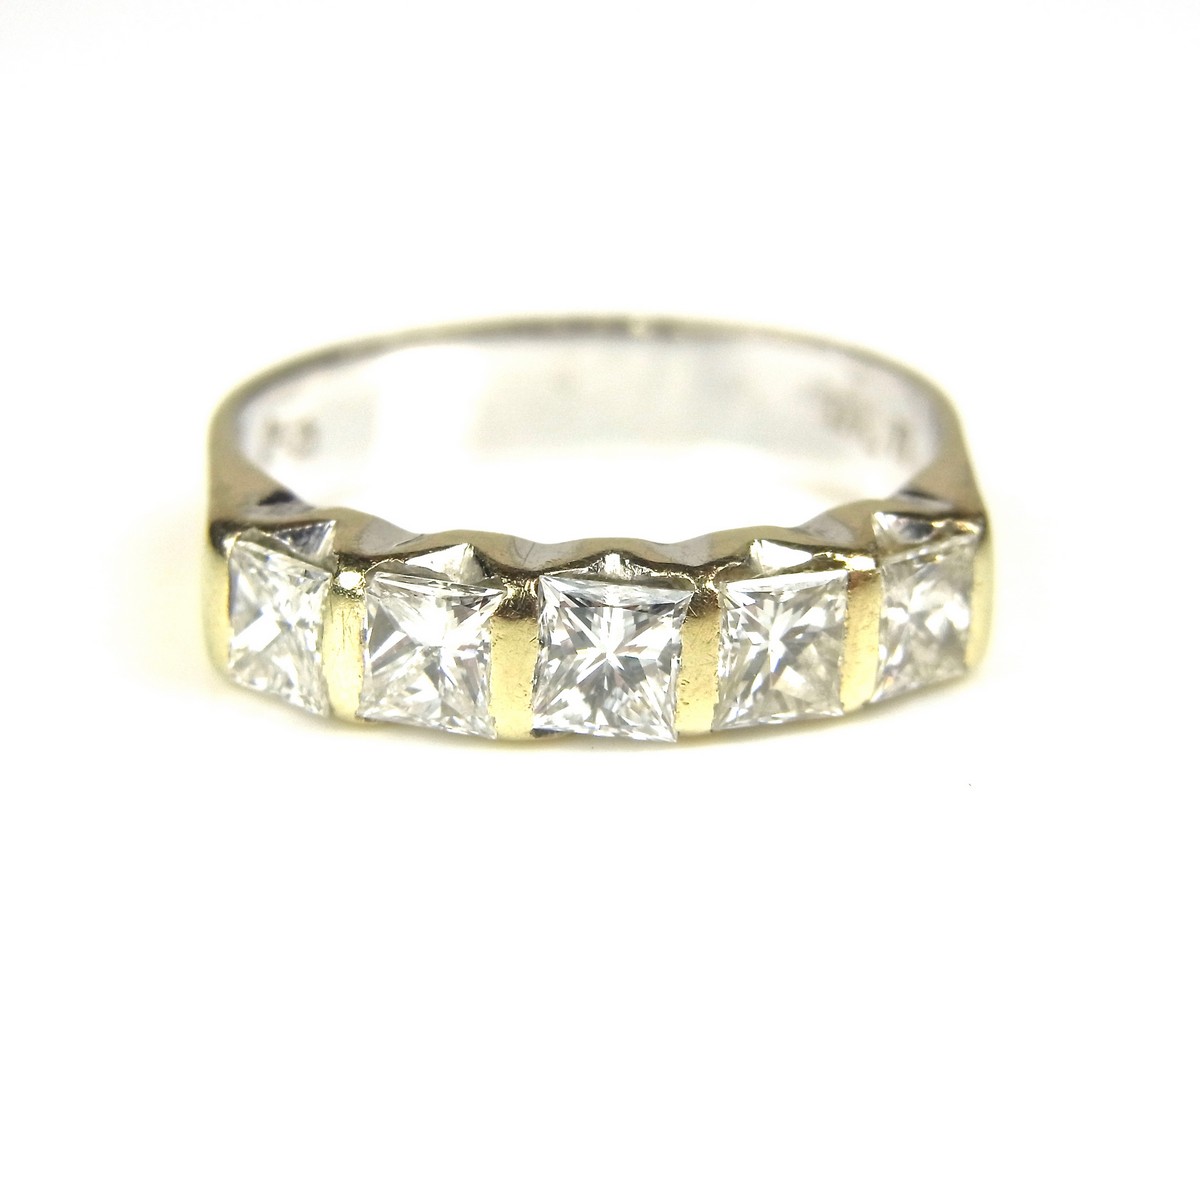 18 ct yellow gold five stone diamond ring. - Image 2 of 2